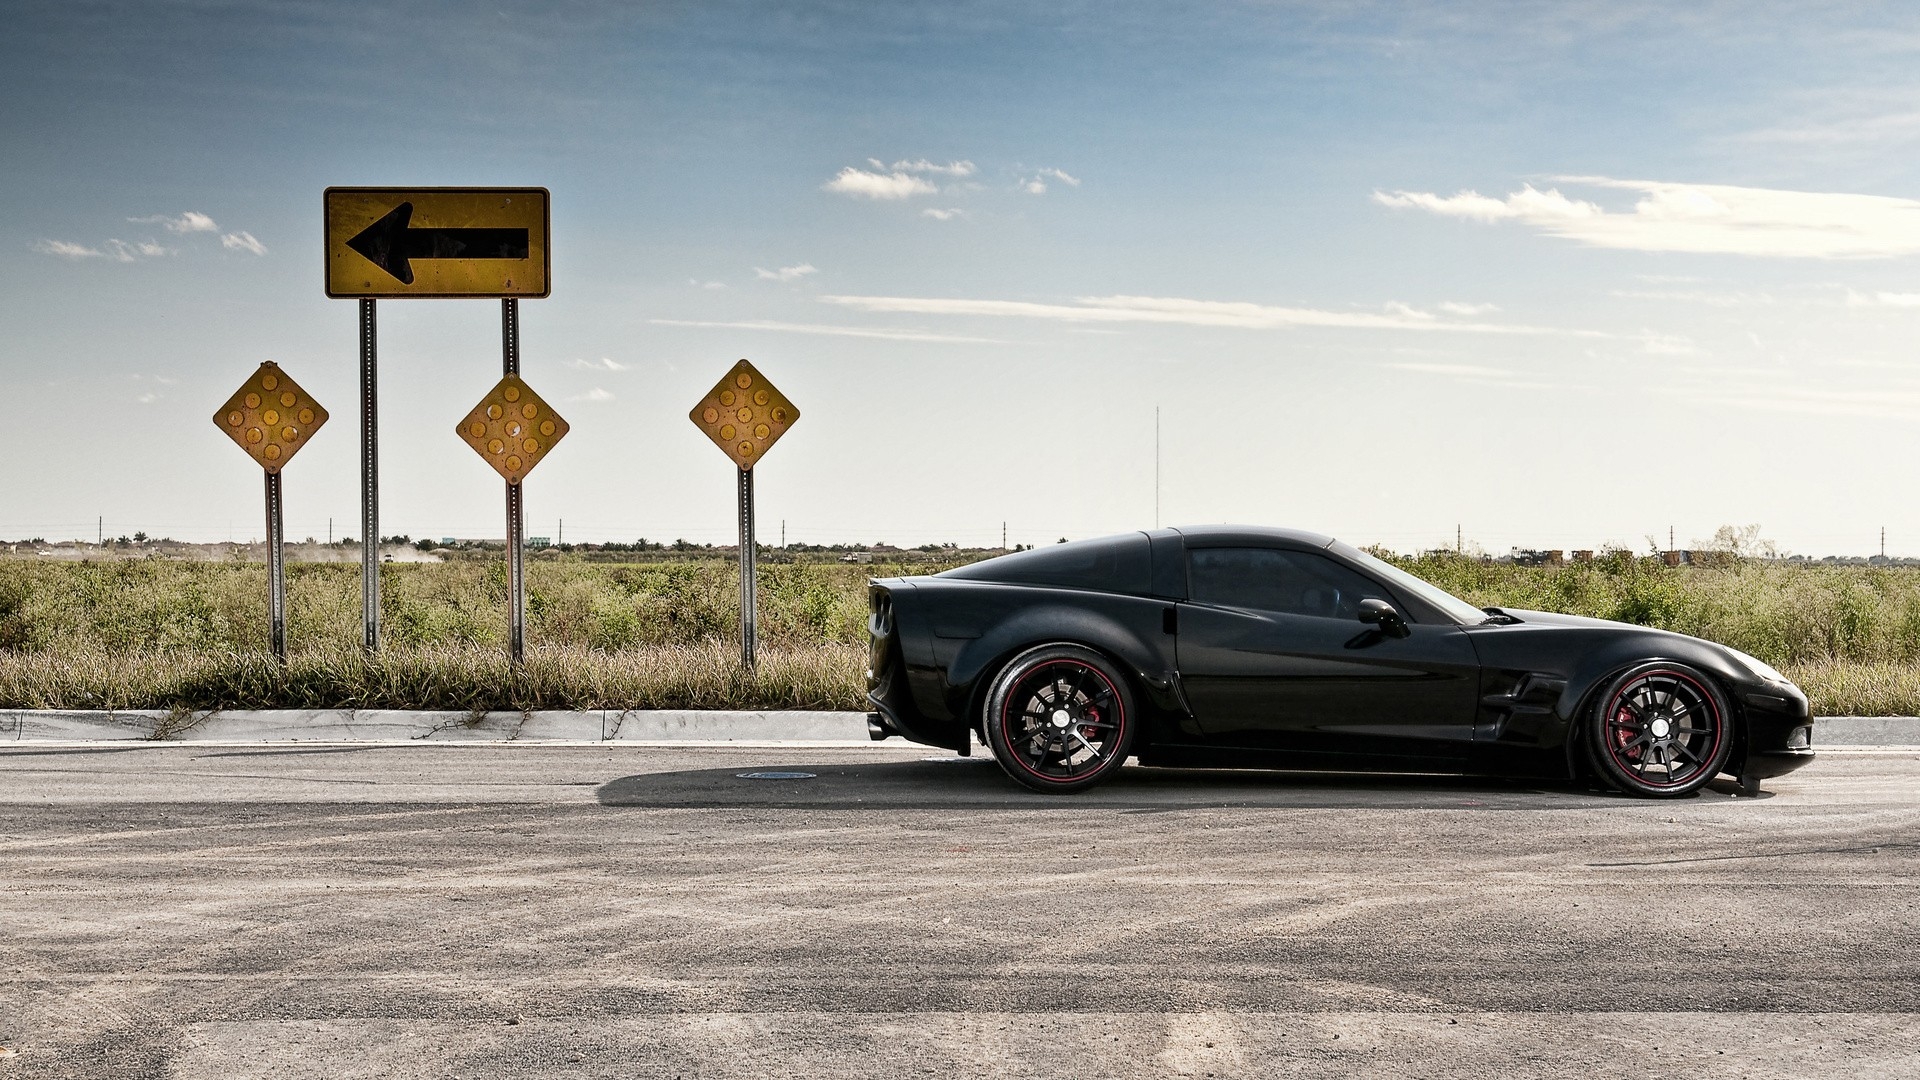 Wallpaper Road Traffic Auto Black Corvette Full